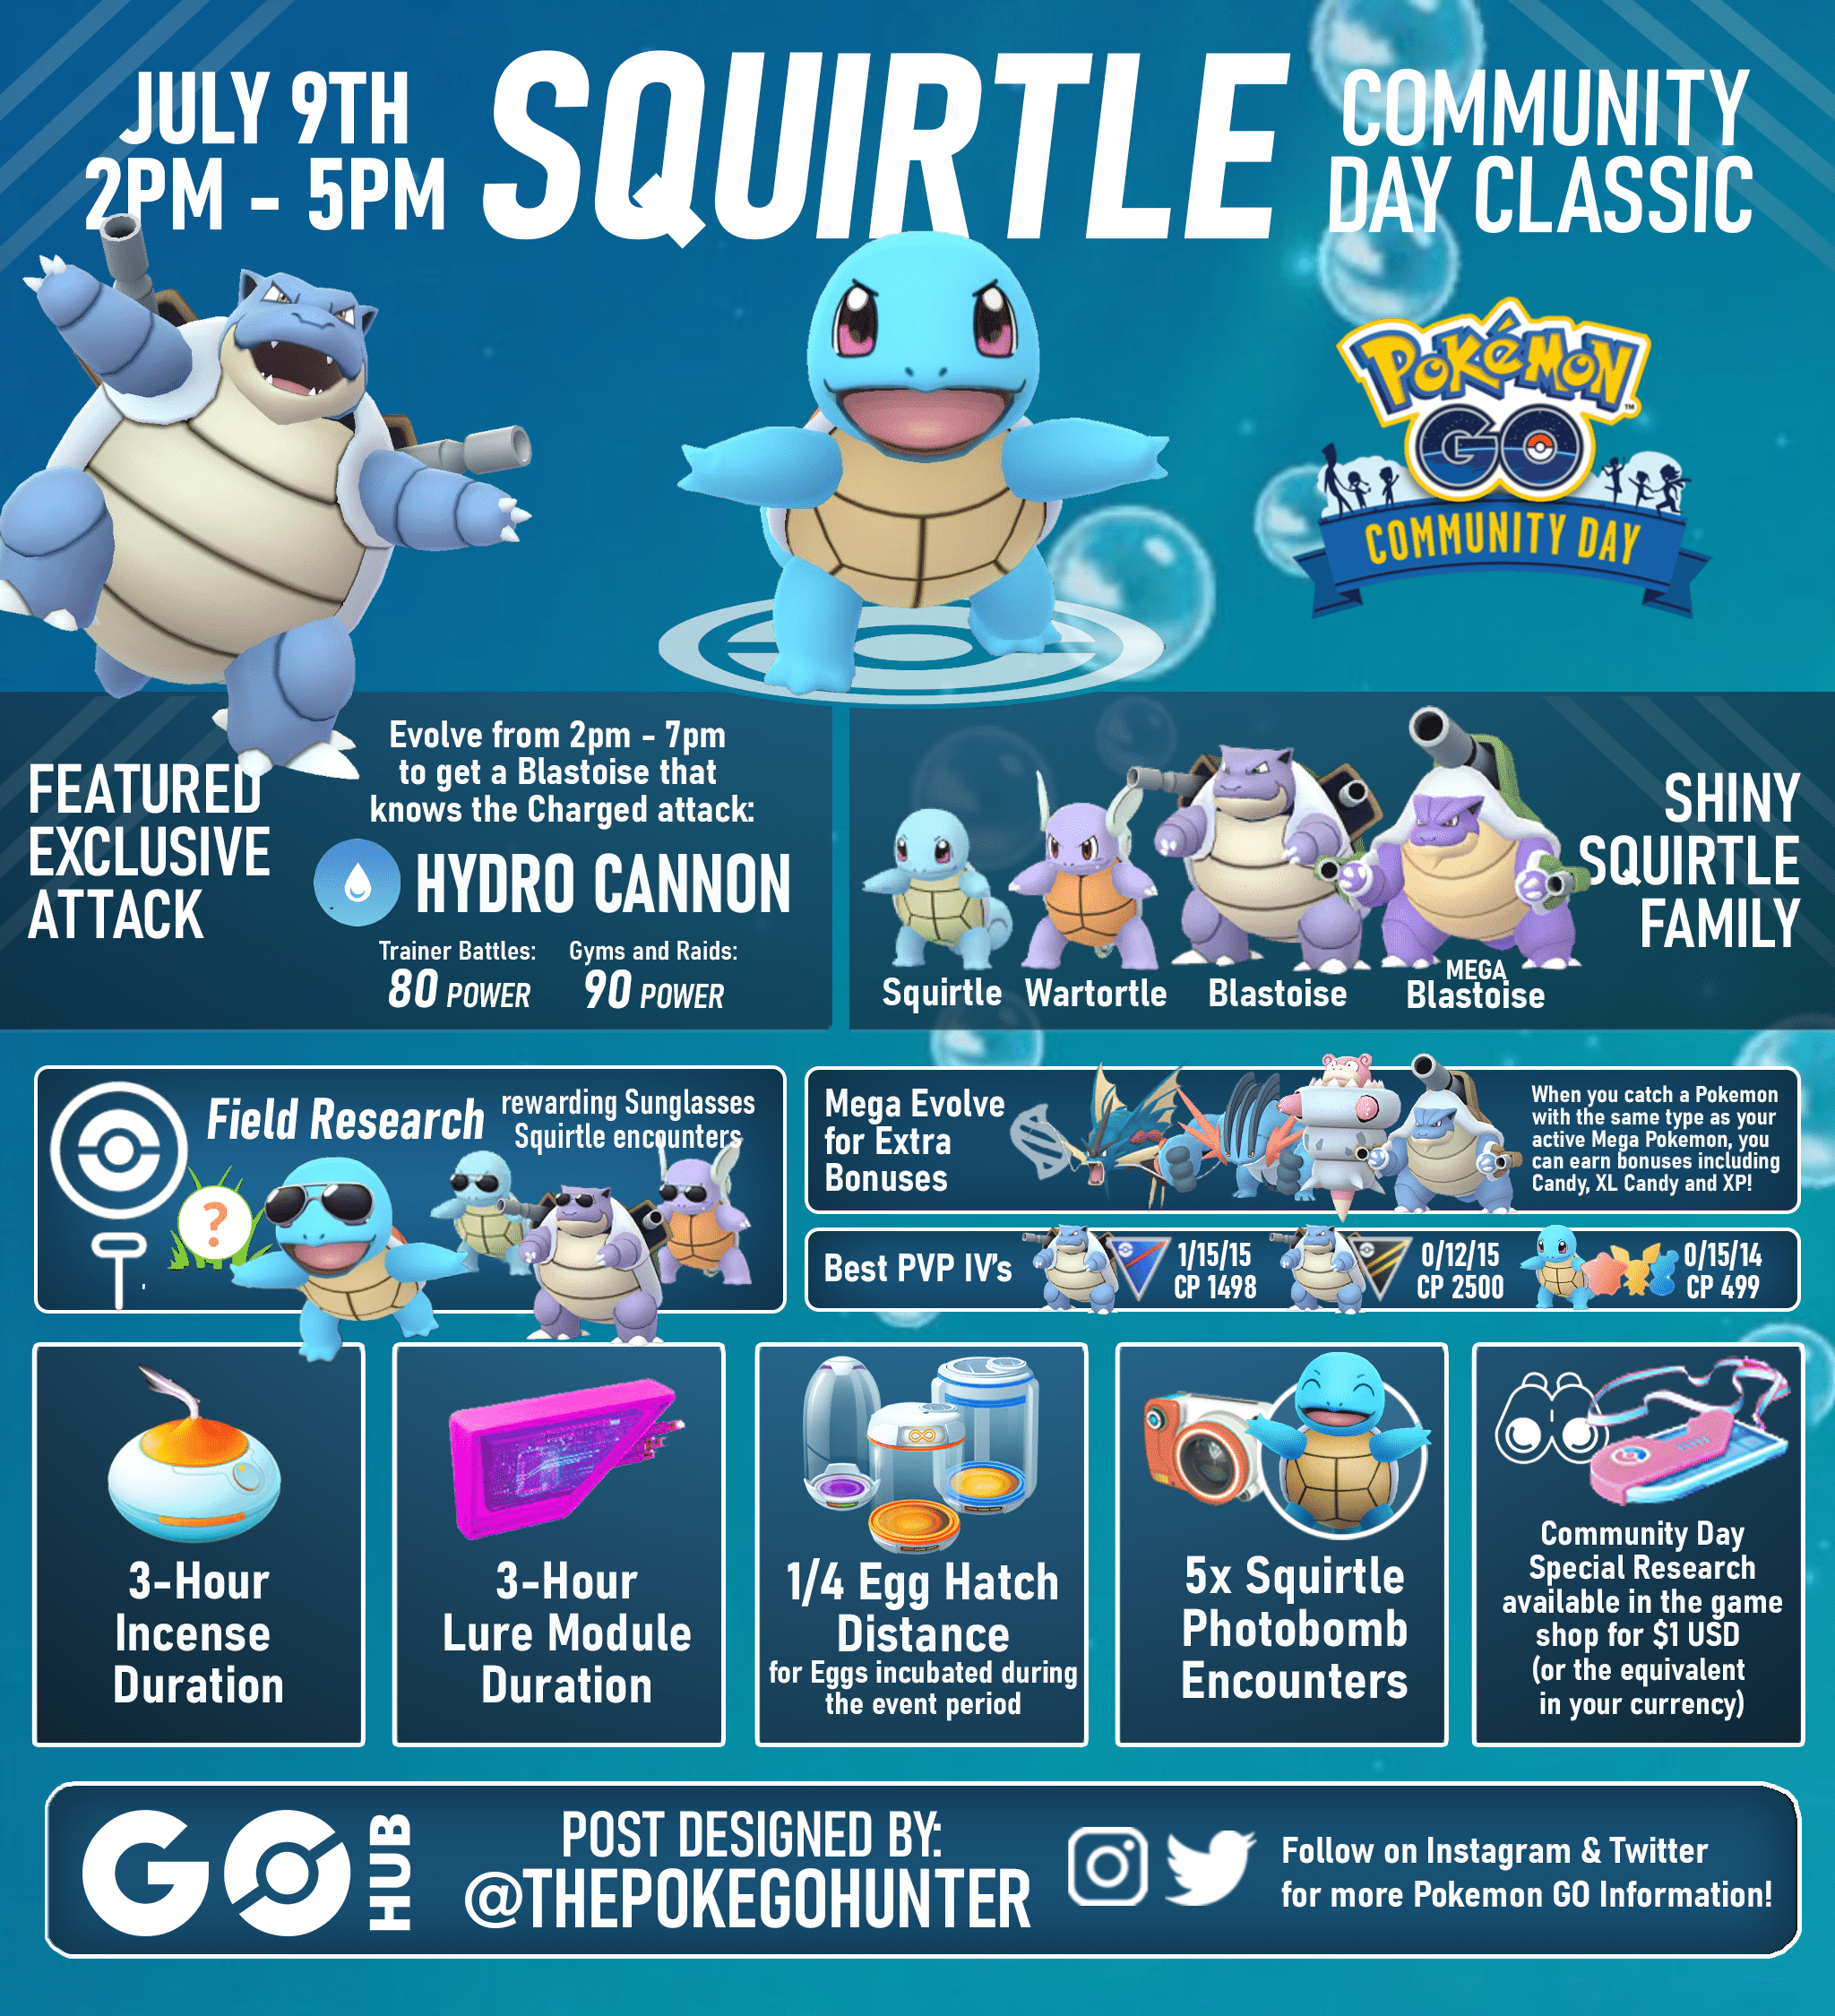 Squirtle Squad Giveaway #1 - Host or Enter a Contest - Pokémon Vortex Forums